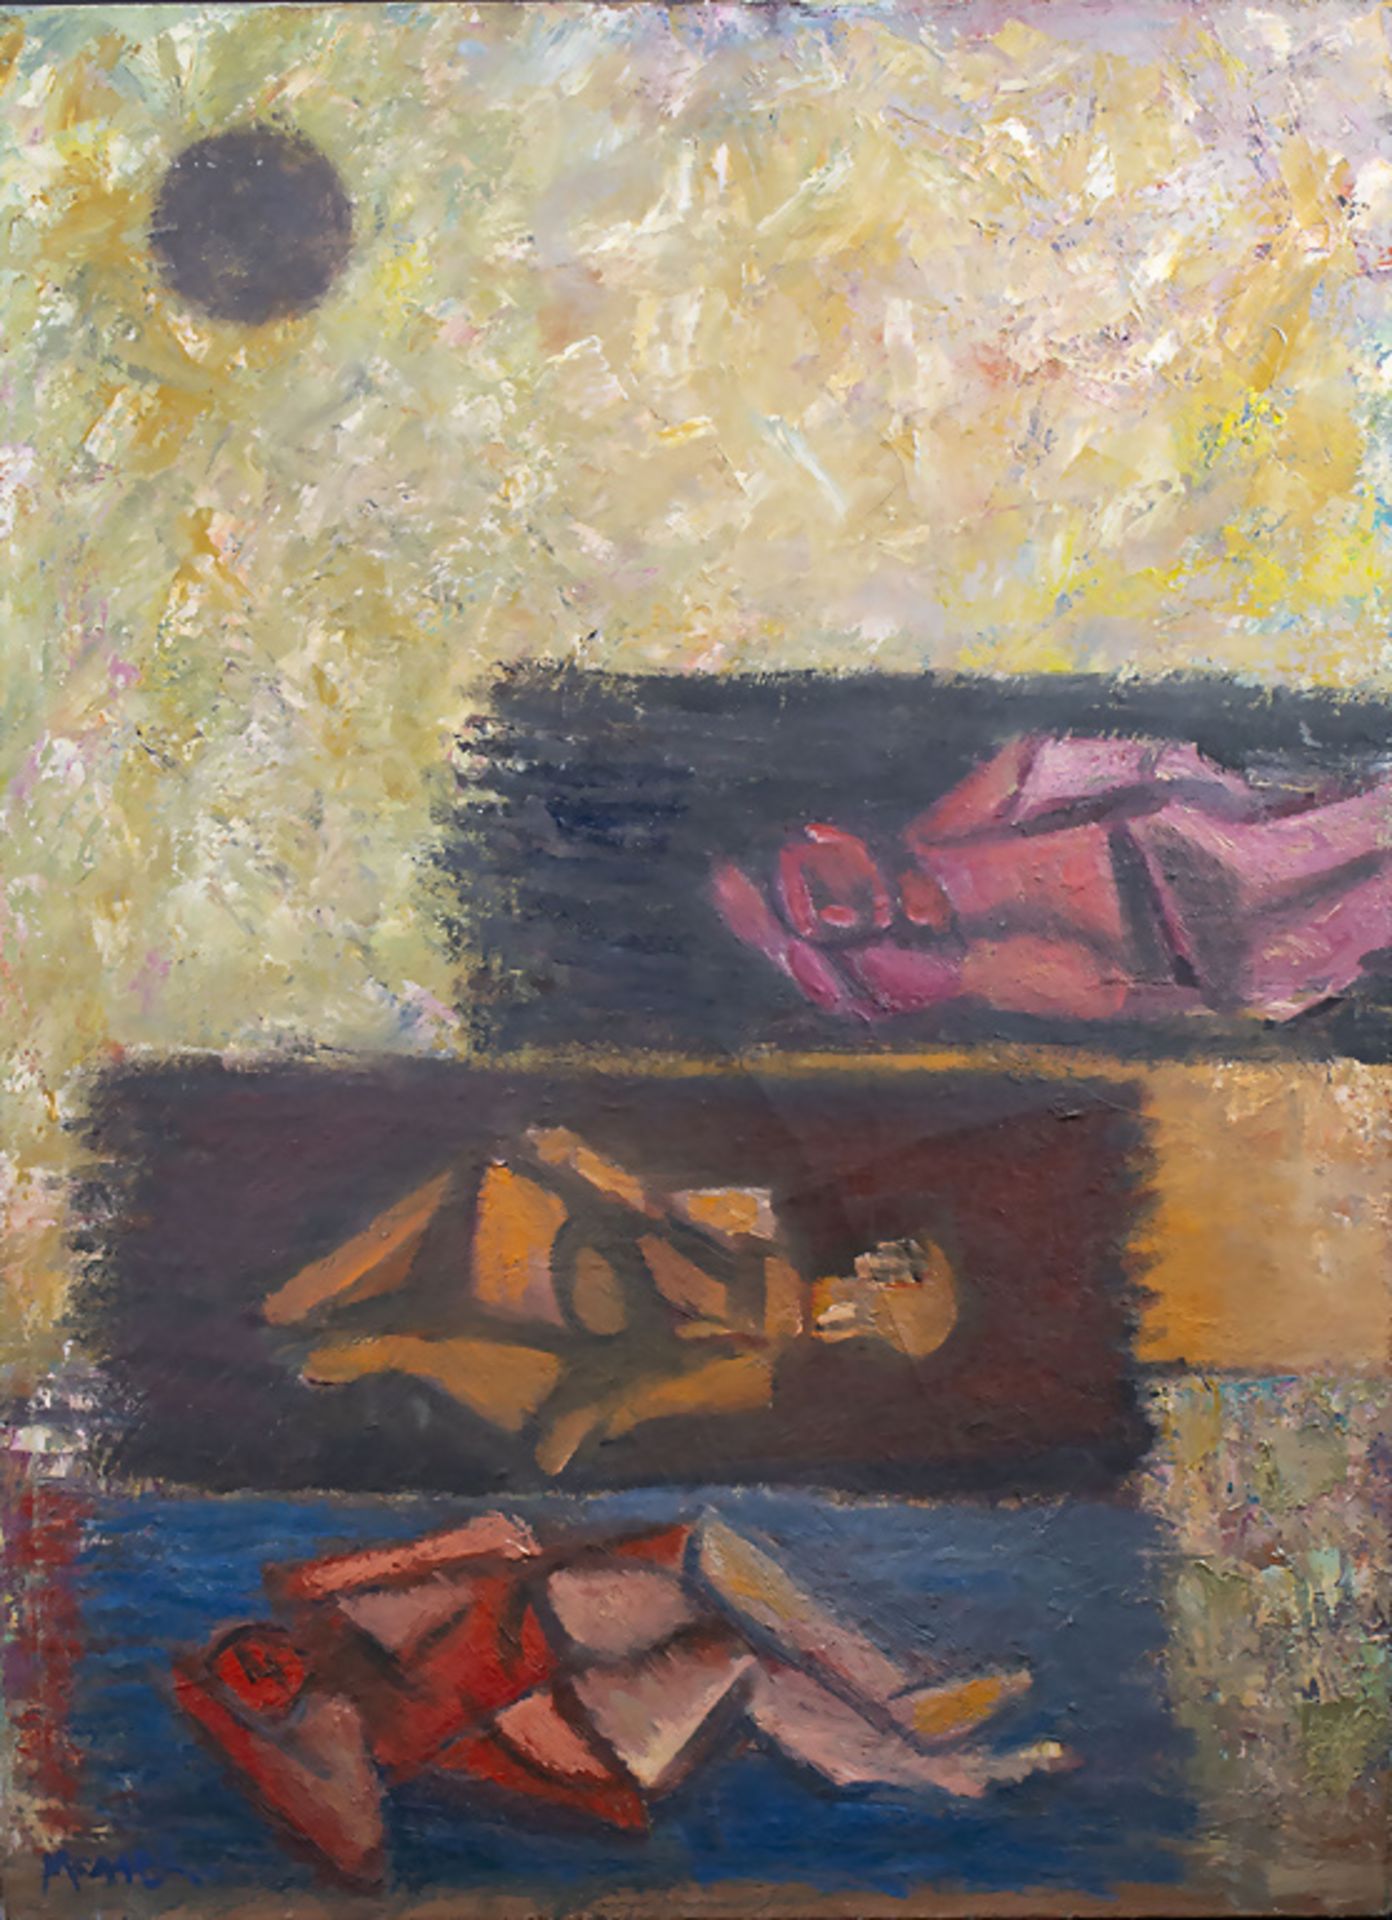 David MESSER (1912-1998), 'Sonnenbadende' / 'Sunbathing ones', 1989